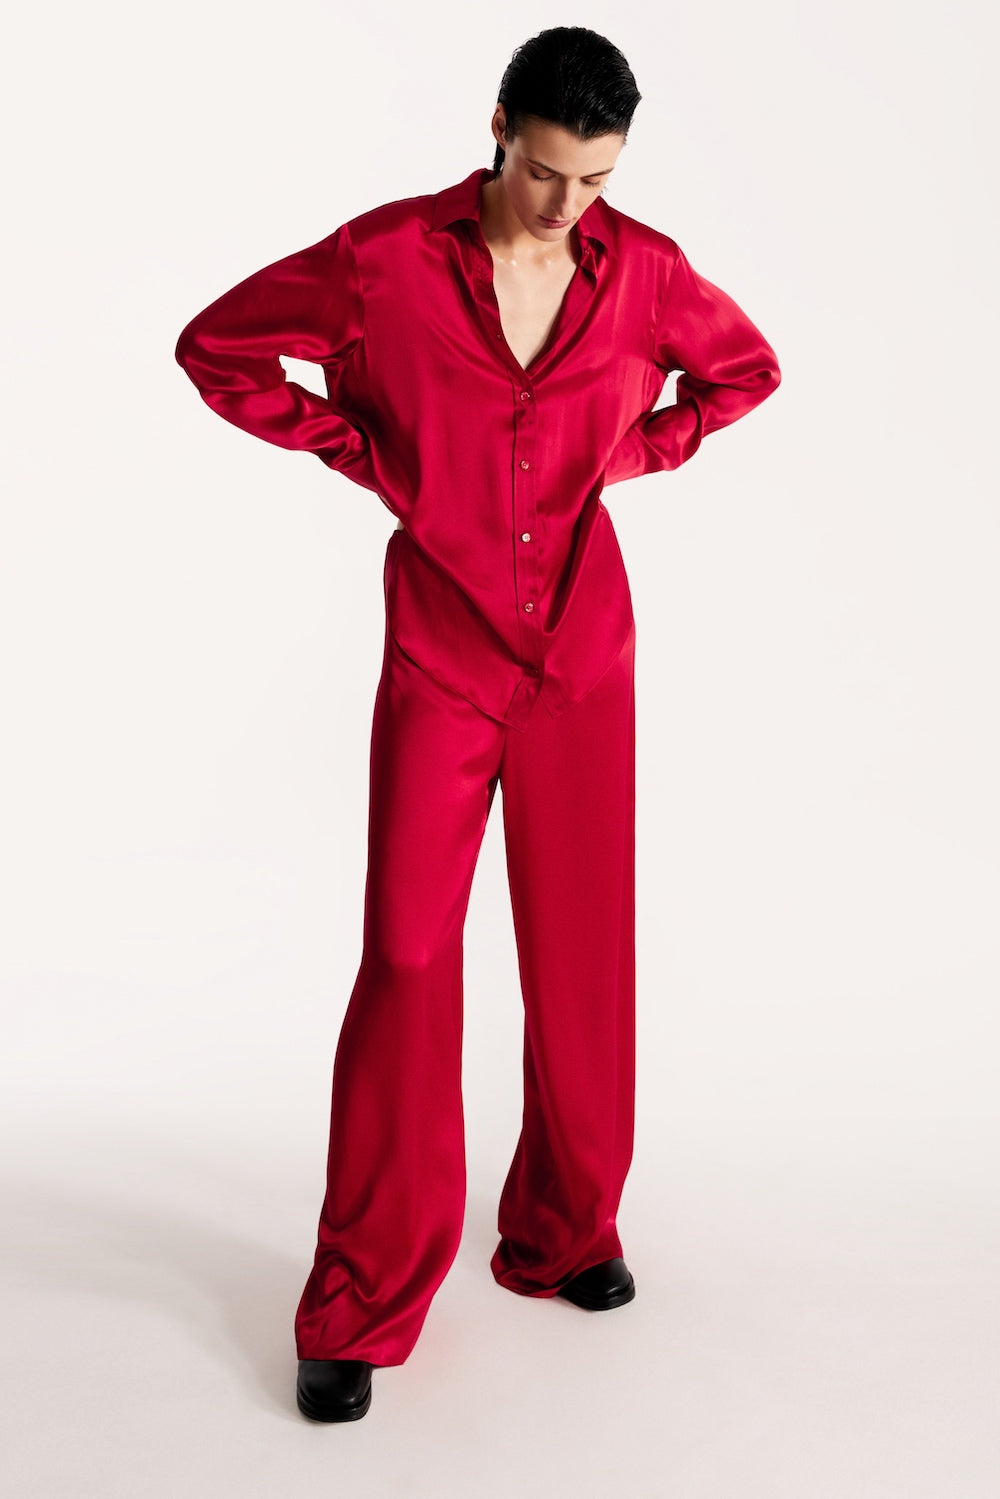 LESSLESS – Women pajama lightweight shirt in cherry red – LESSLESS LLC